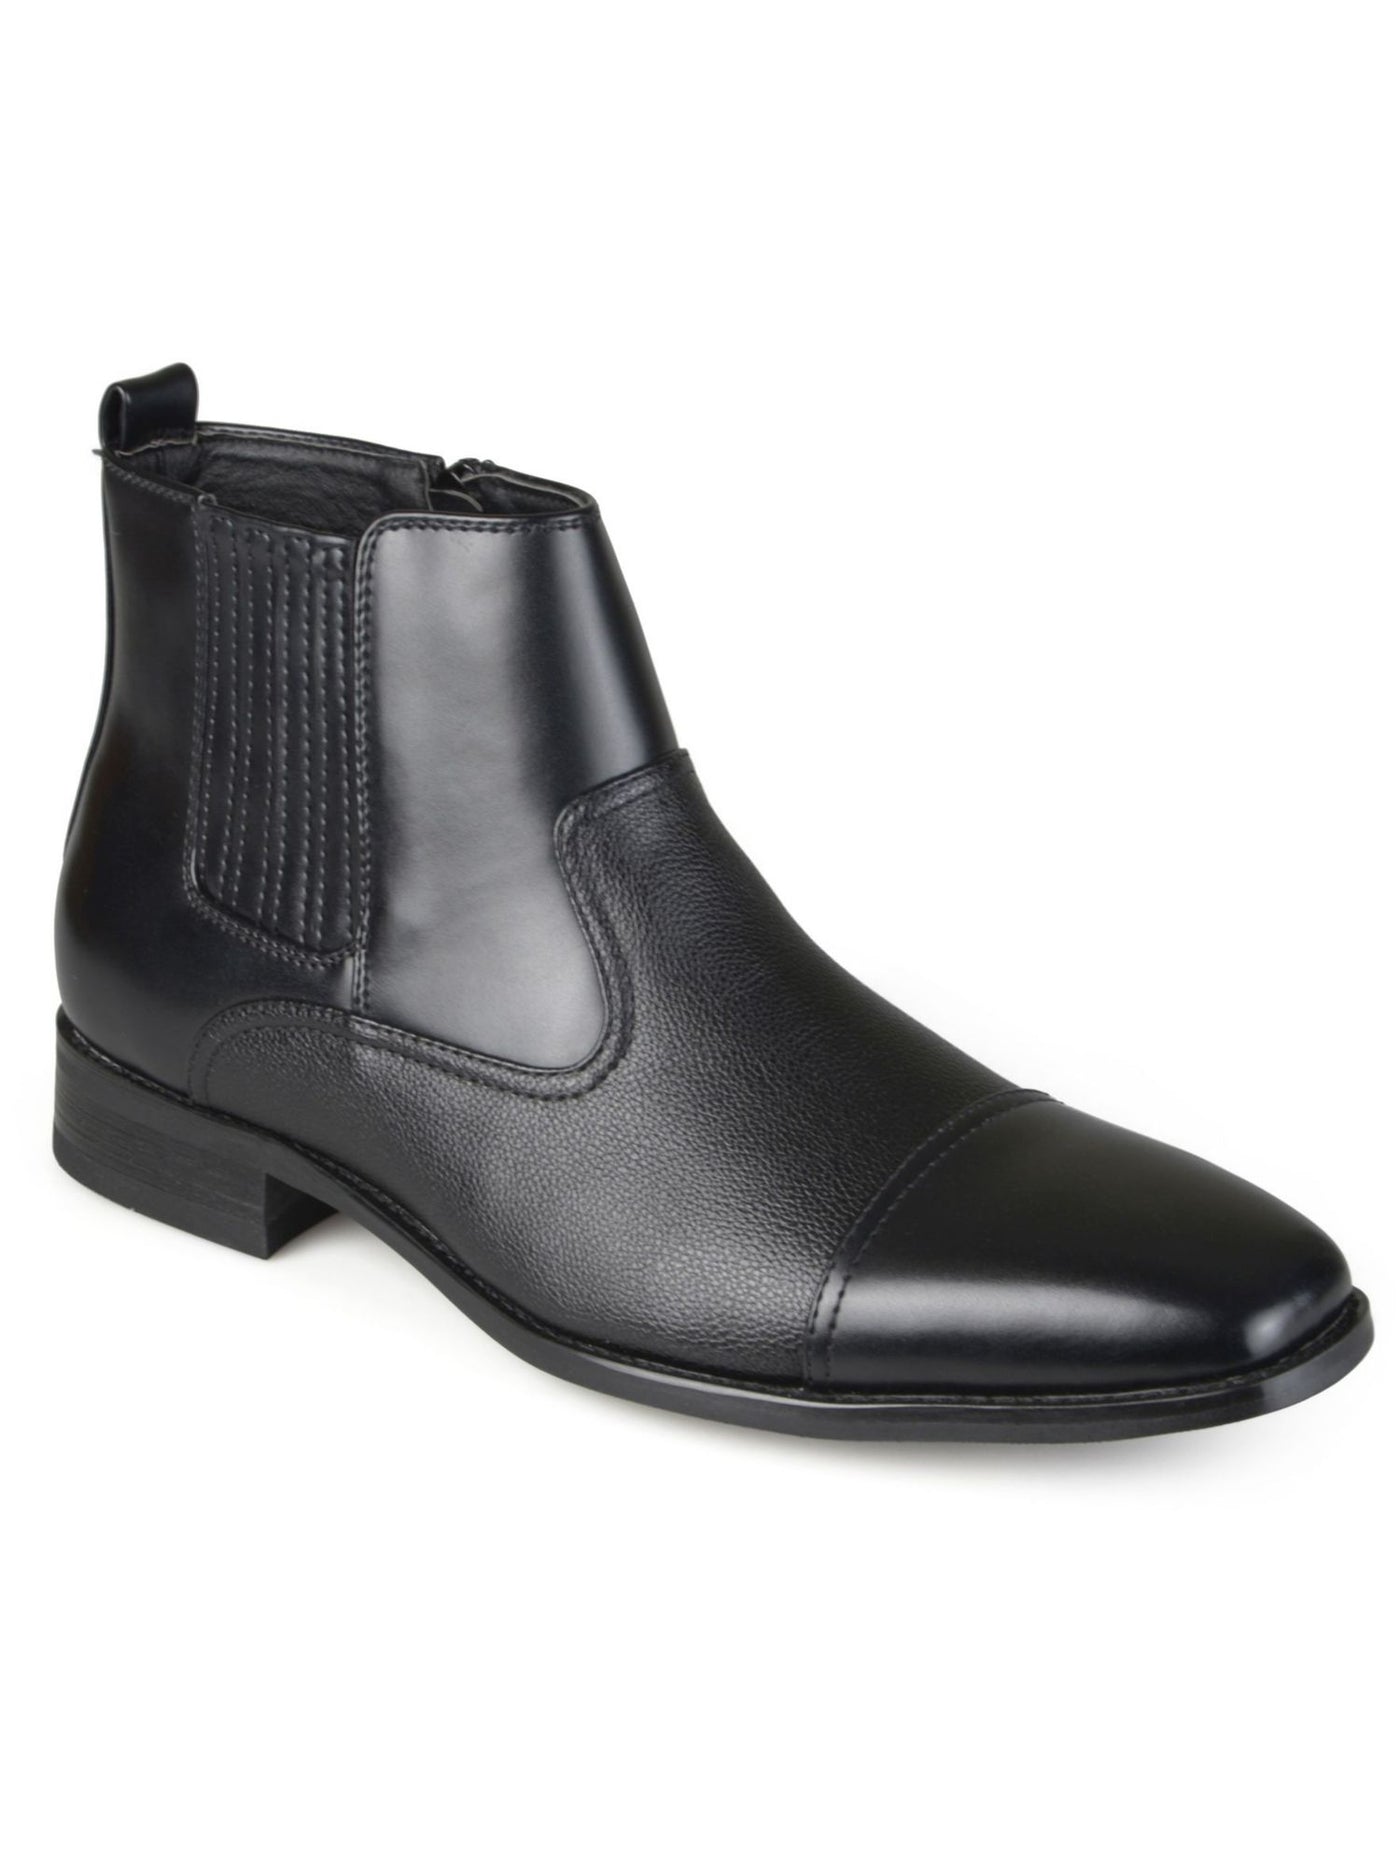 VANCE COMPANY Mens Black Mixed Media Heel Pull-Tab Goring Padded Alex Square Toe Block Heel Zip-Up Dress Boots 11 W